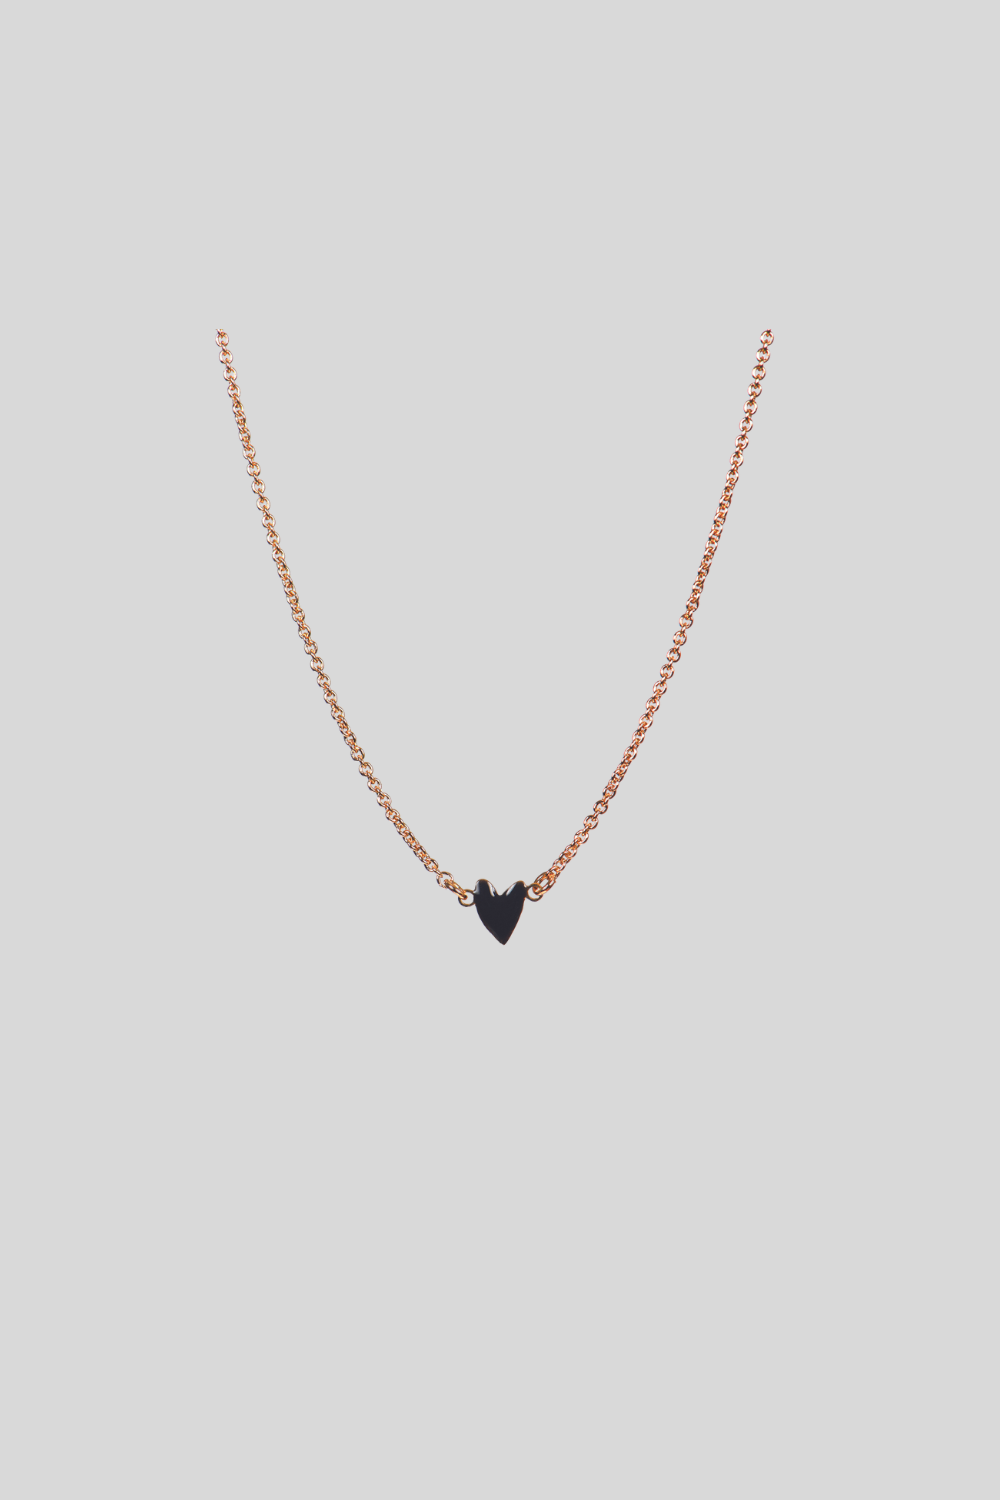 GRANT heart necklace black